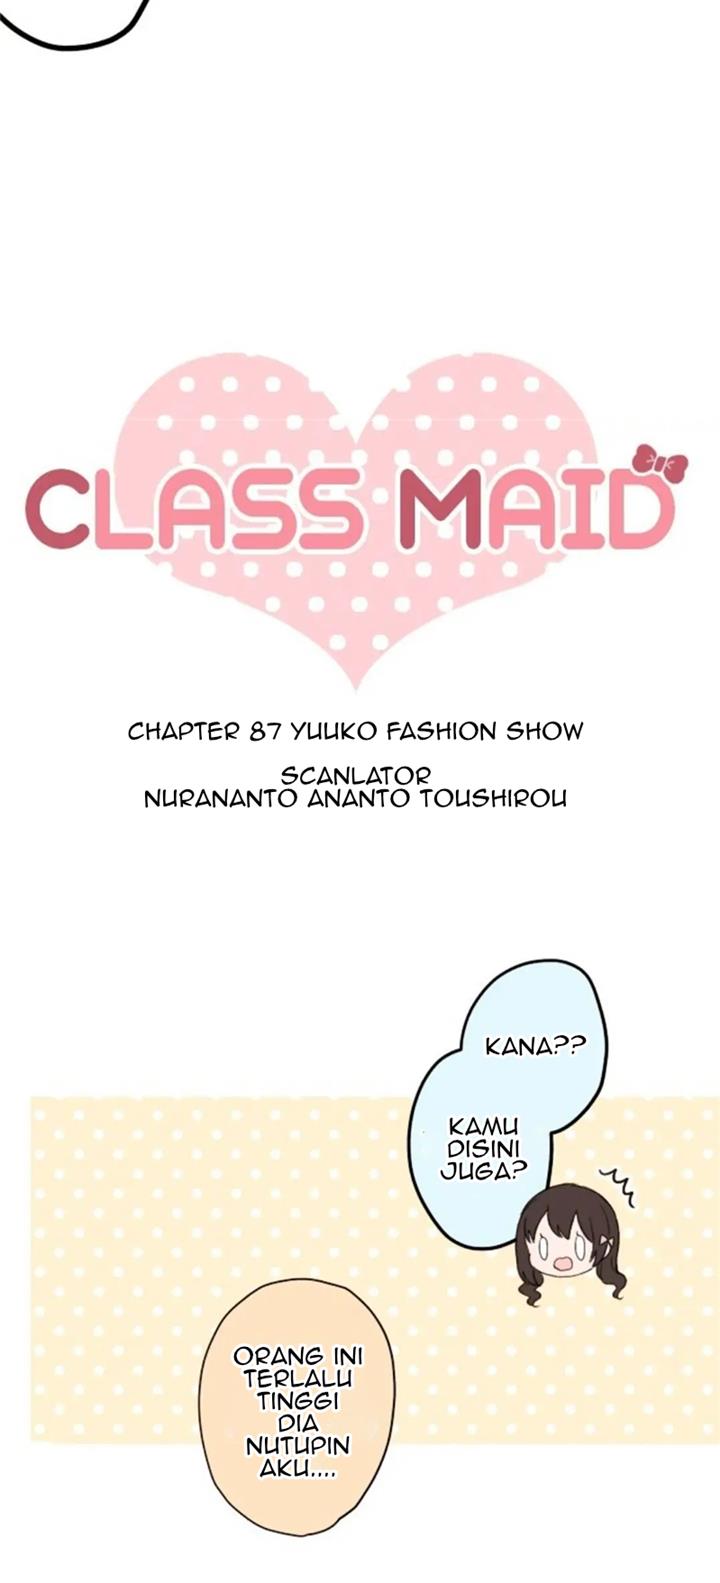 Class Maid (Shimamura) Chapter 87